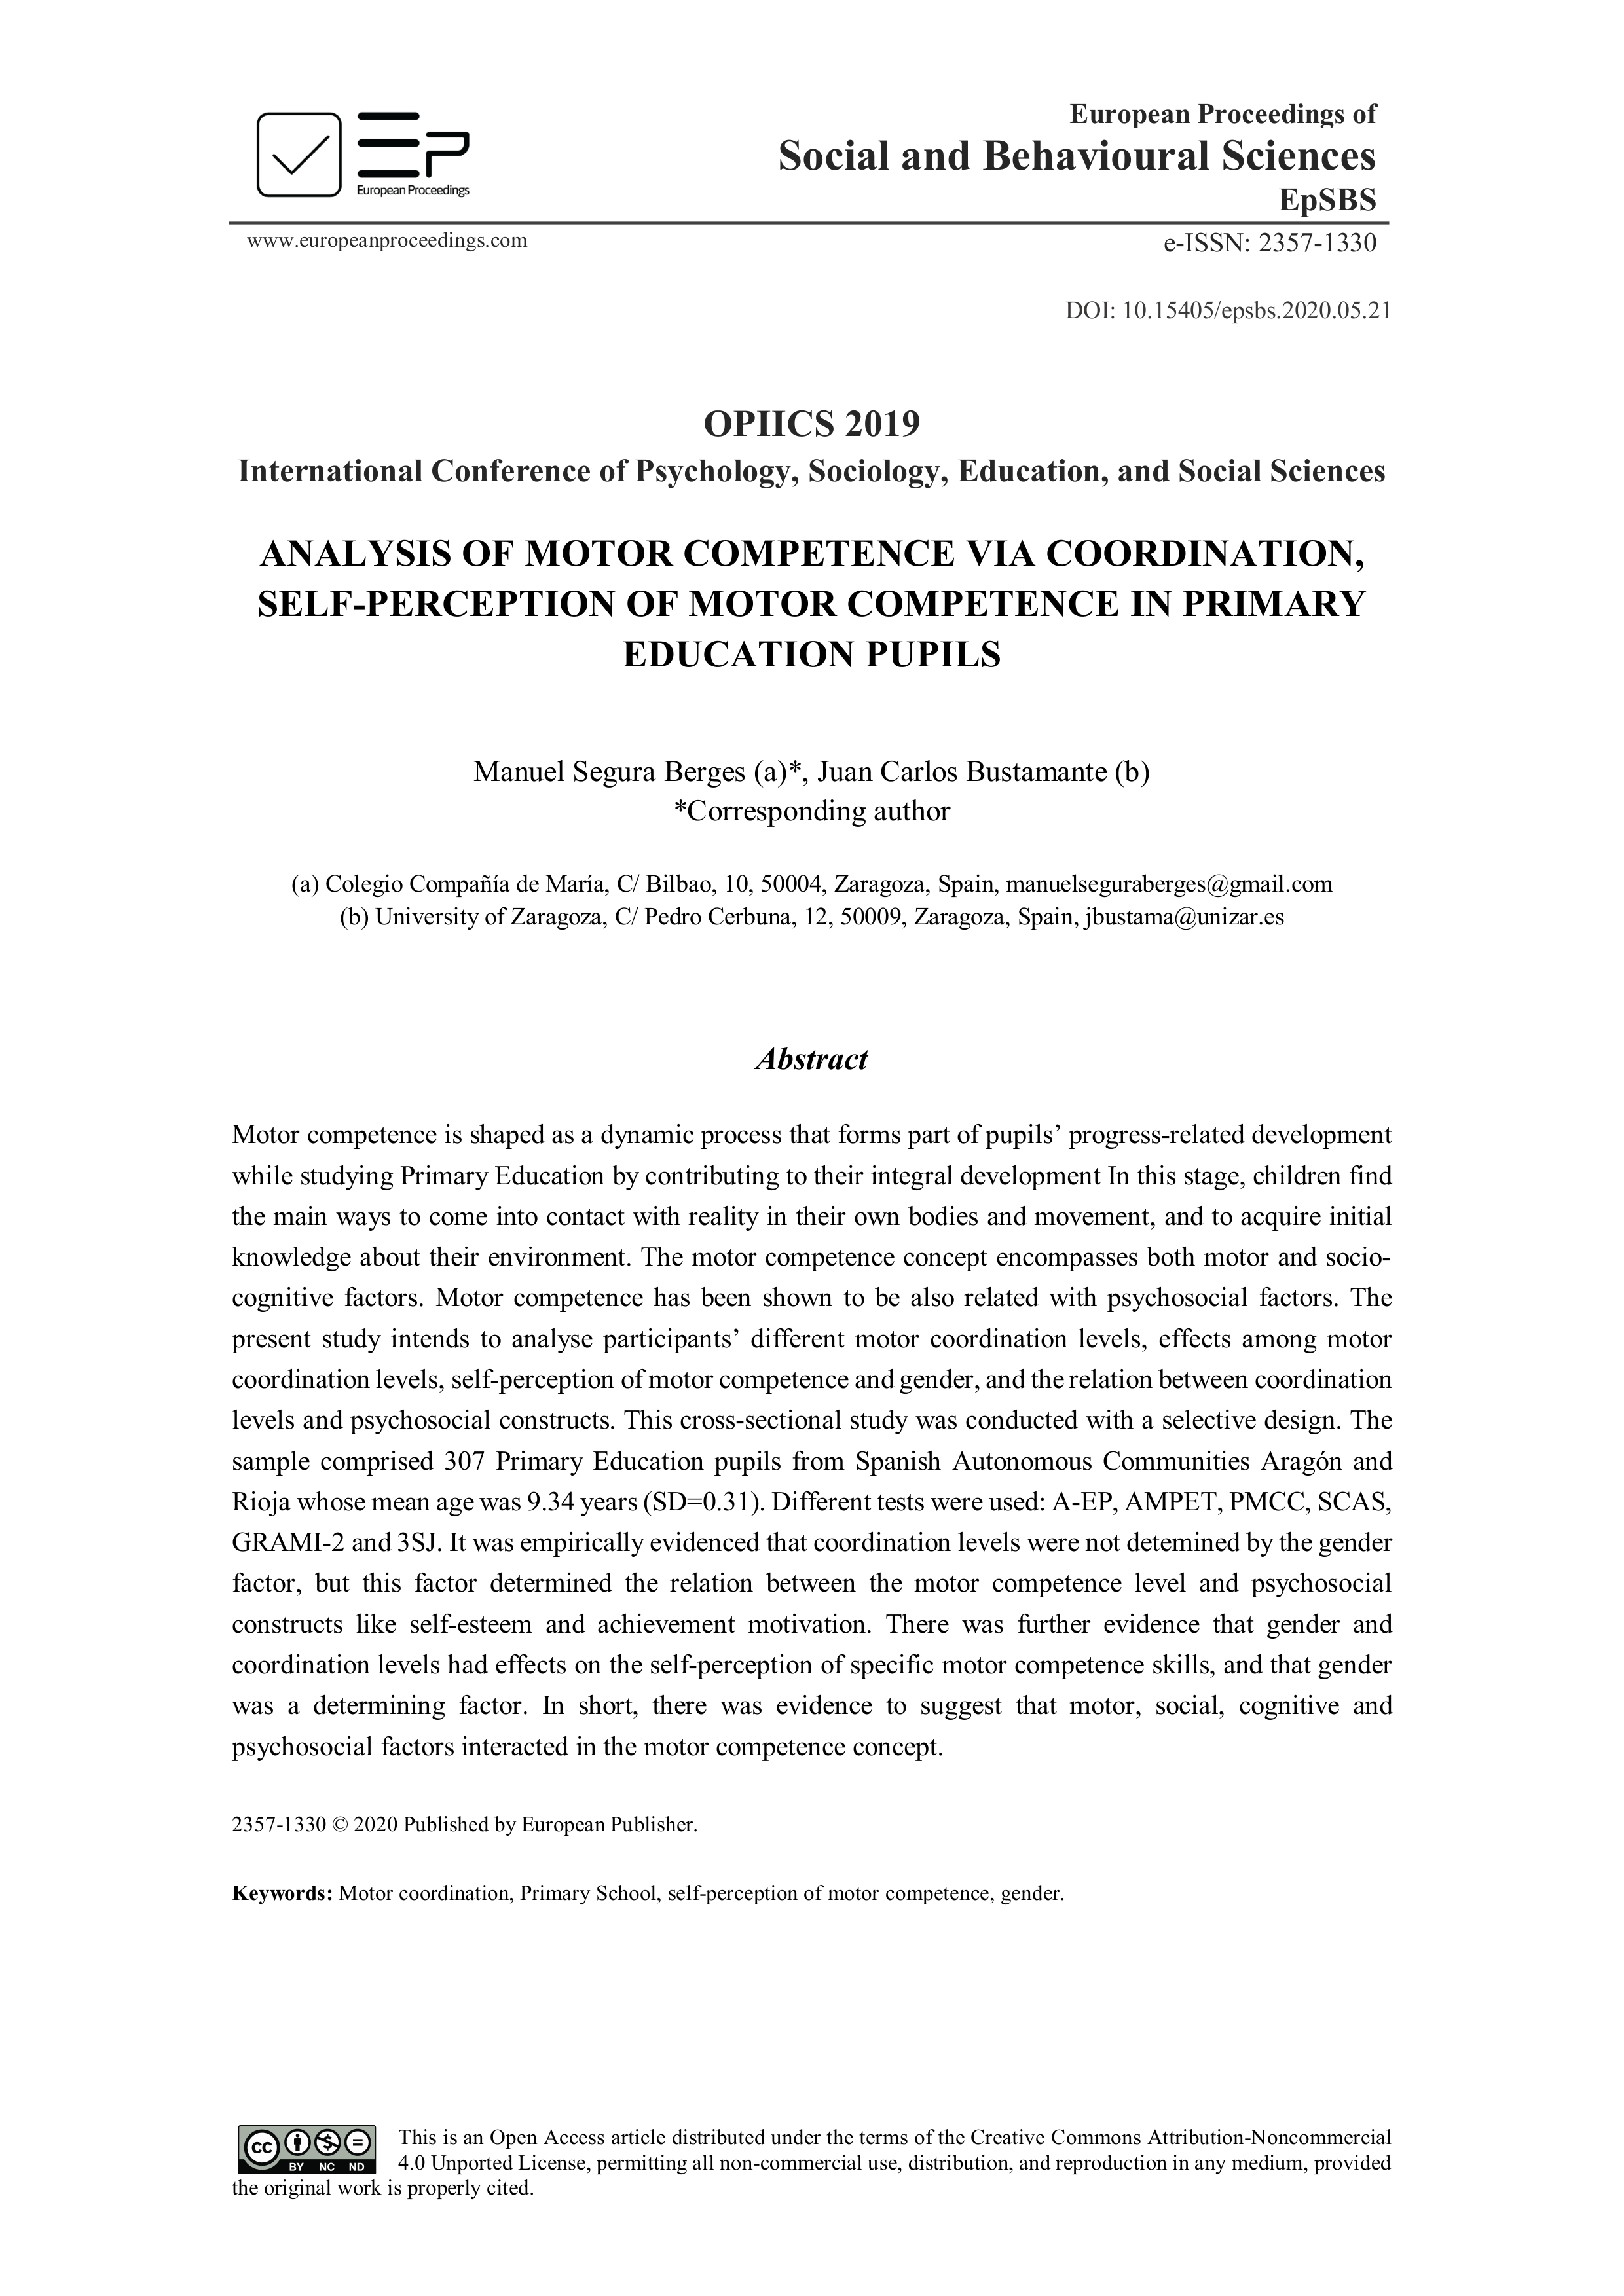 Analysis Of Motor Competence Via Coordination, Self-Perception Of Motor Competence In Primary Education Pupils